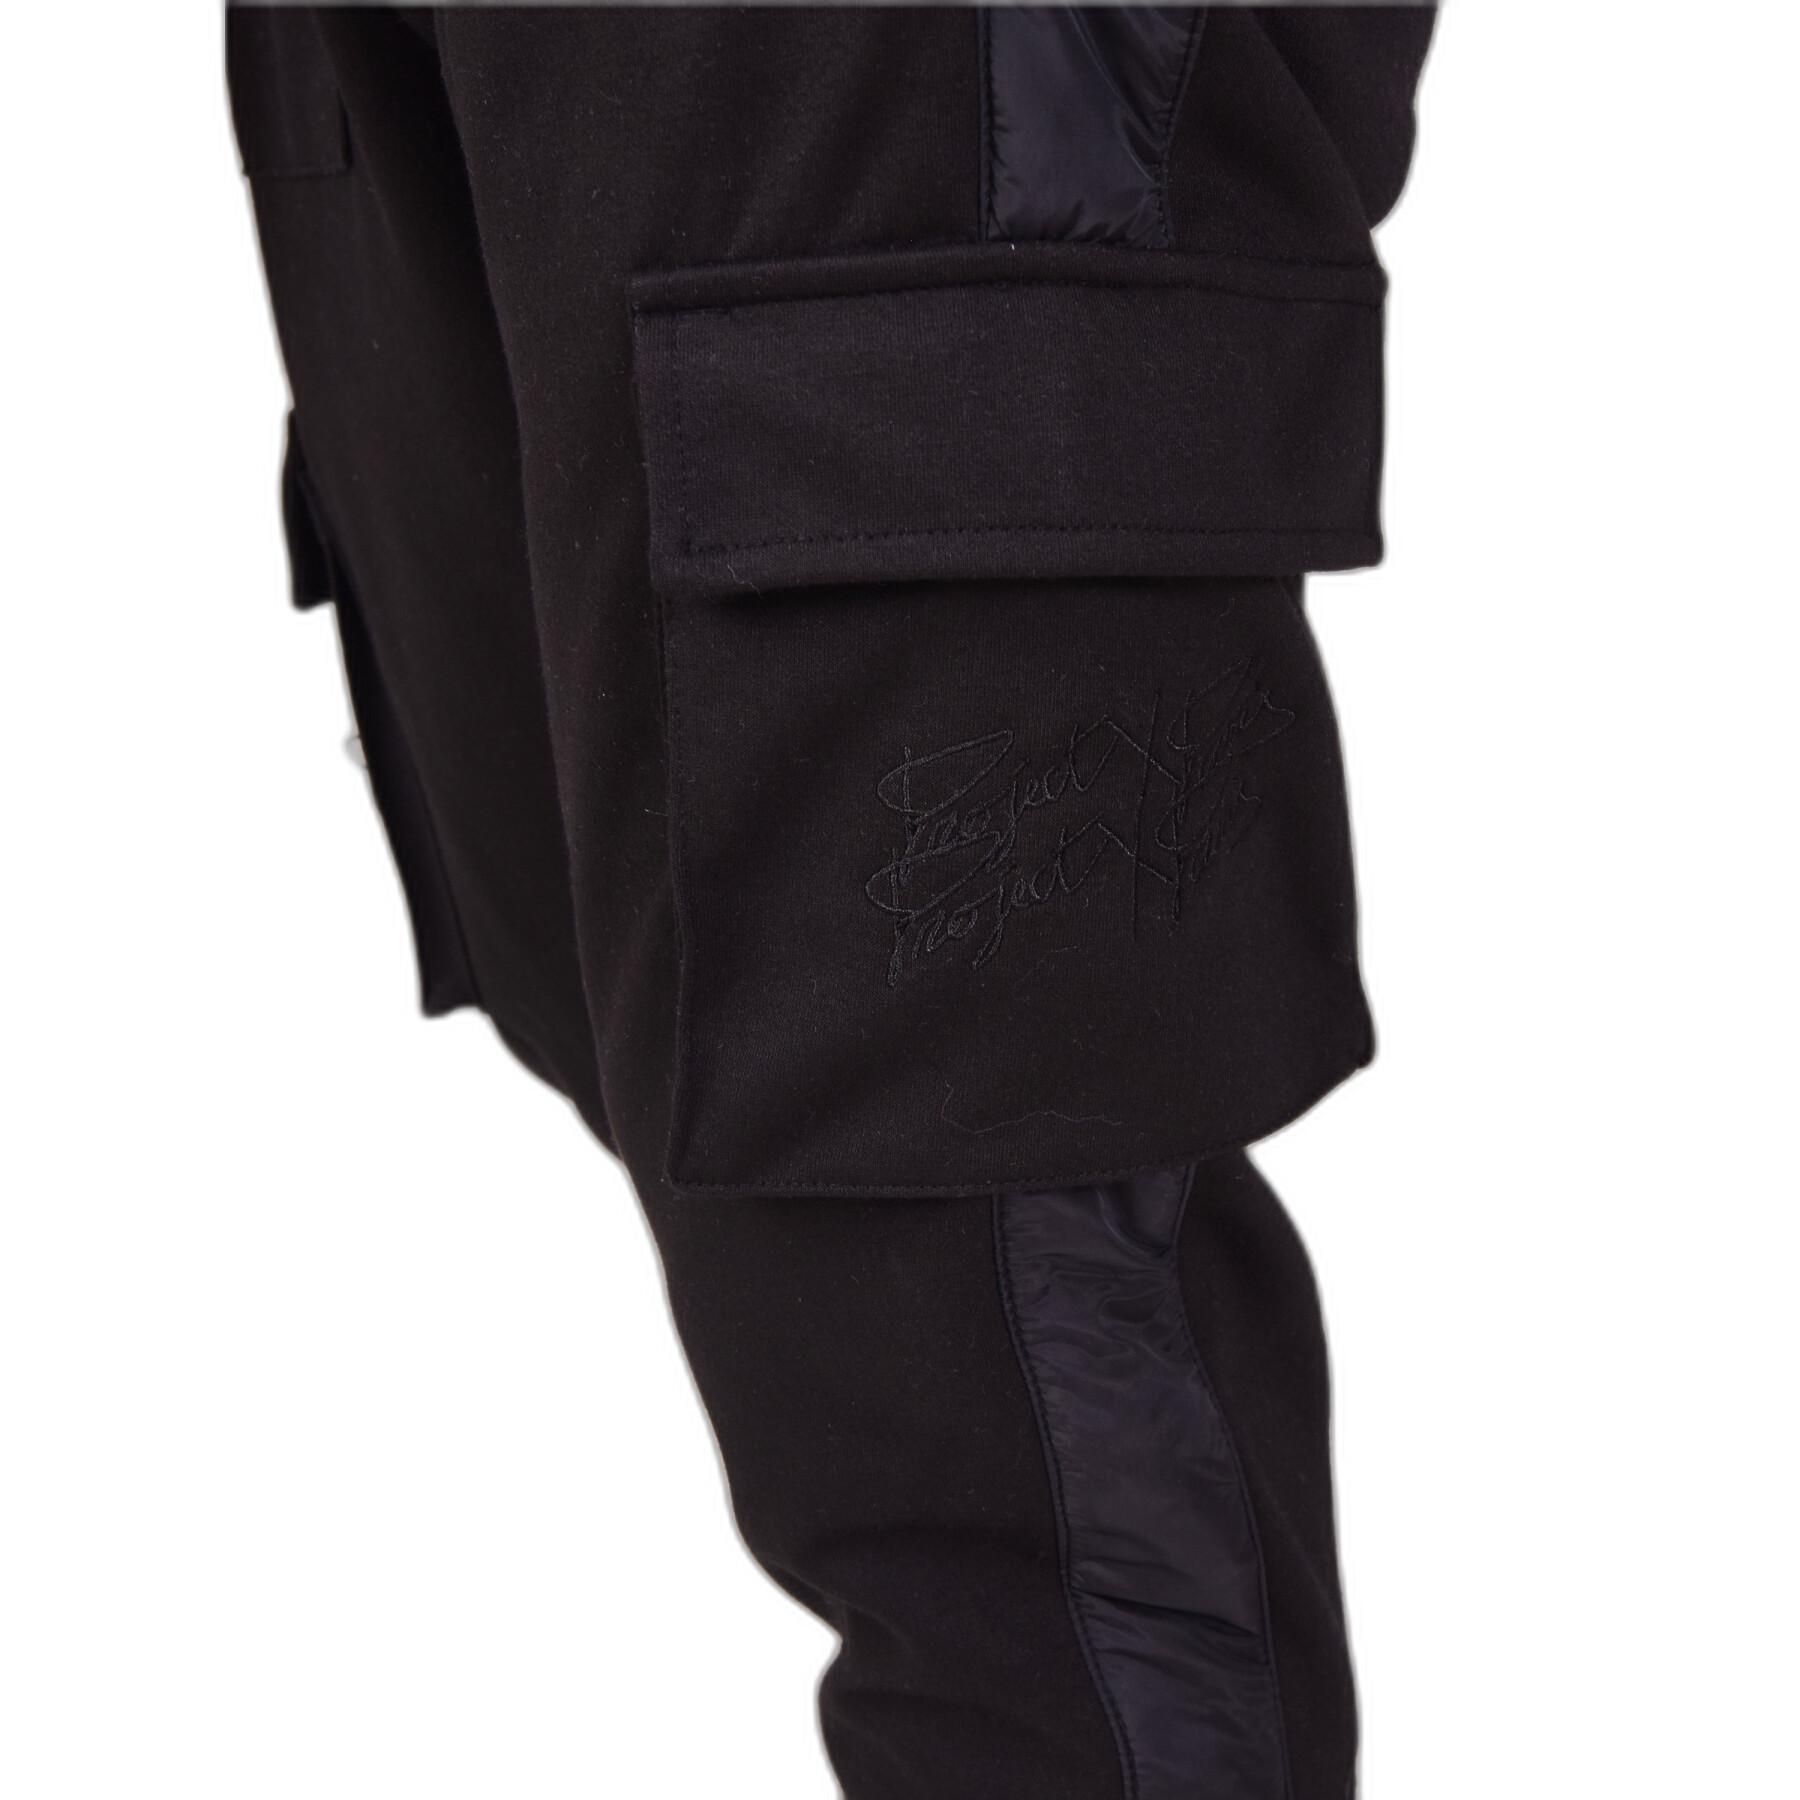 Loose-fitting fleece cargo jogging suit Project X Paris